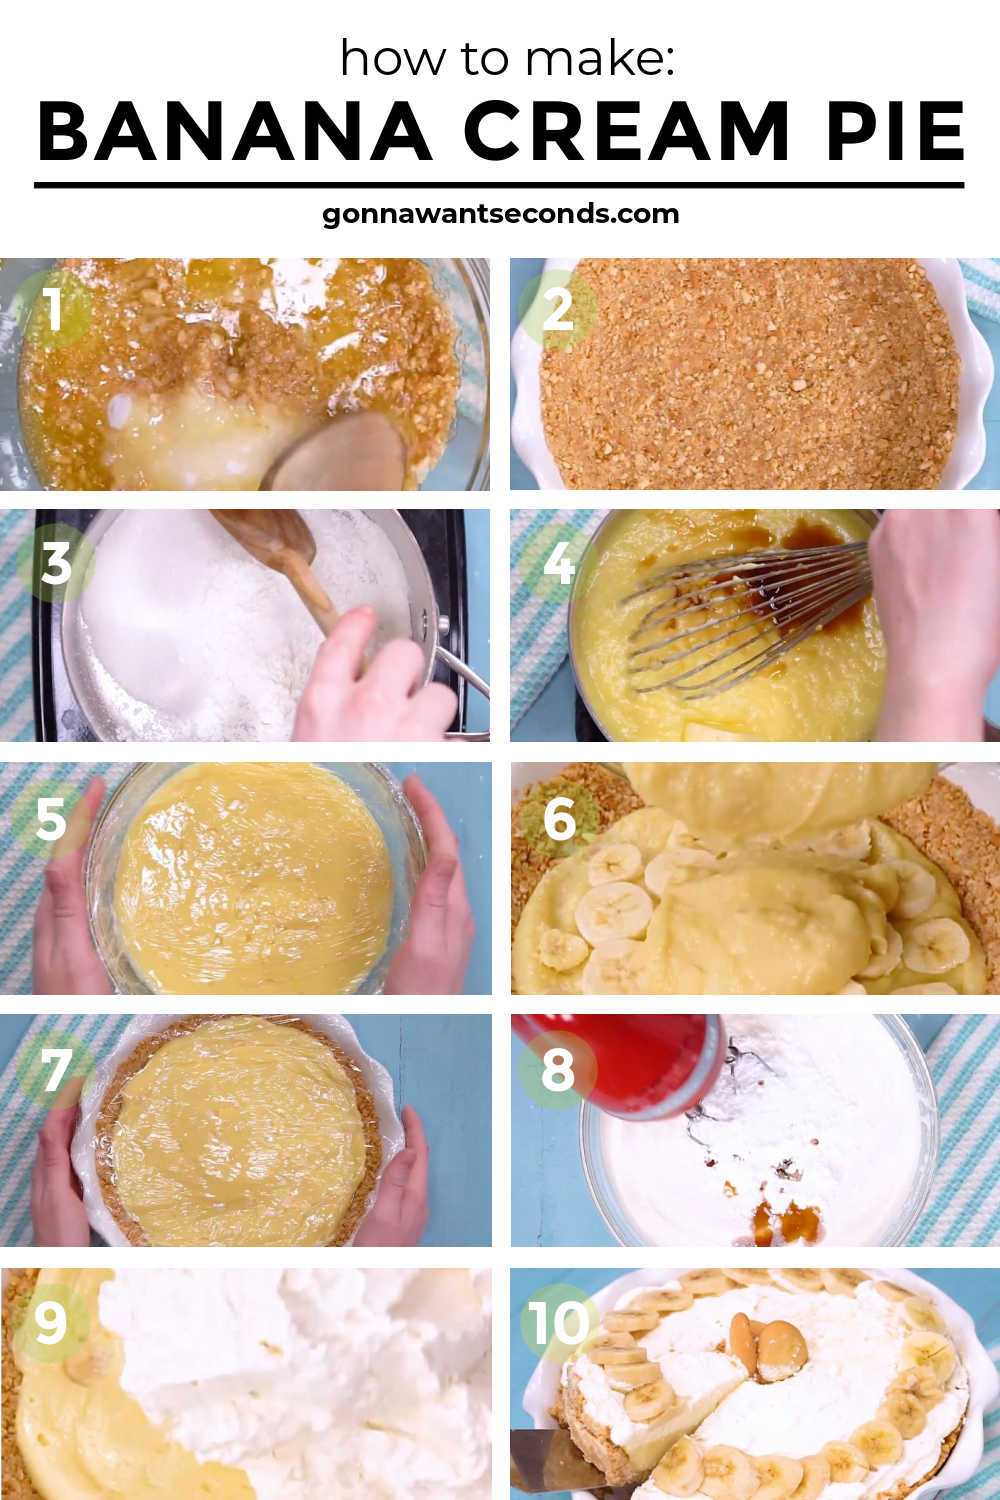 Step by step how to make banana cream pie